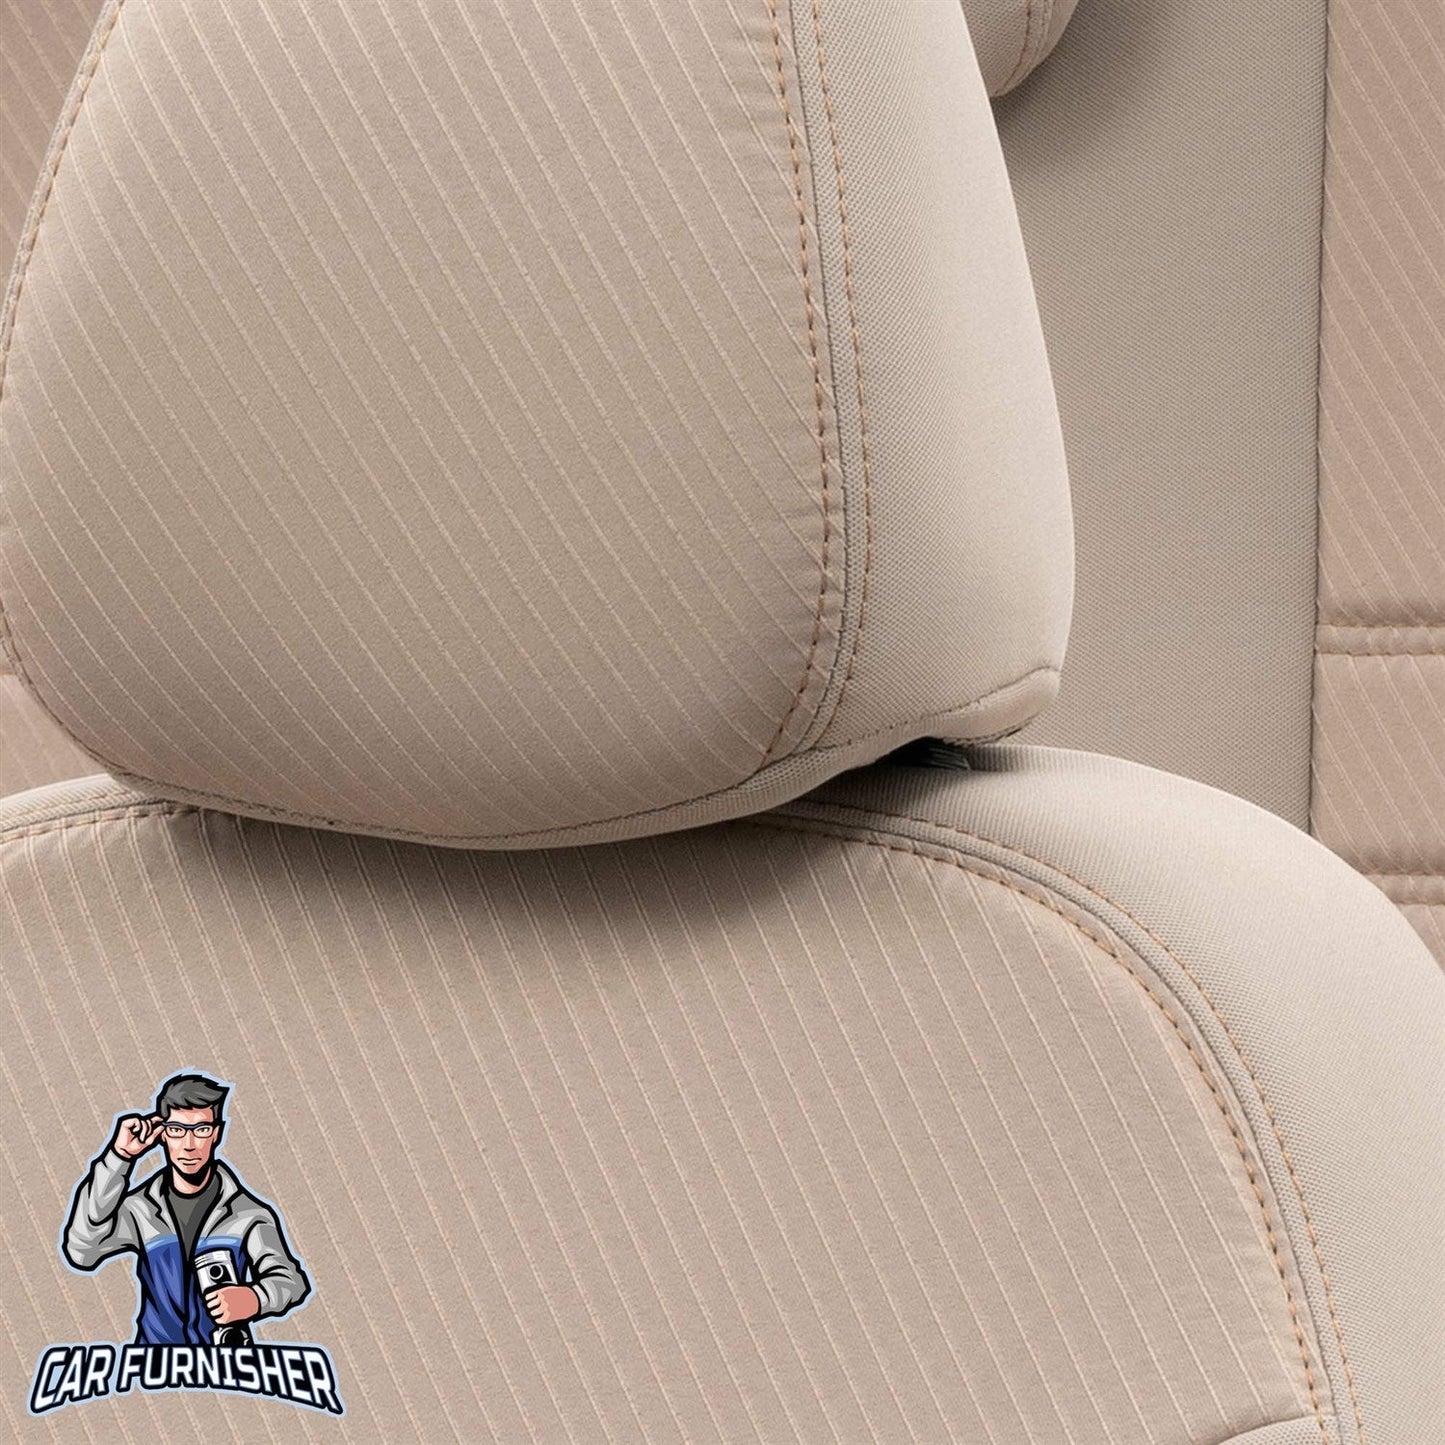 Bmw 1 Series Seat Cover Original Jacquard Design Dark Beige Jacquard Fabric